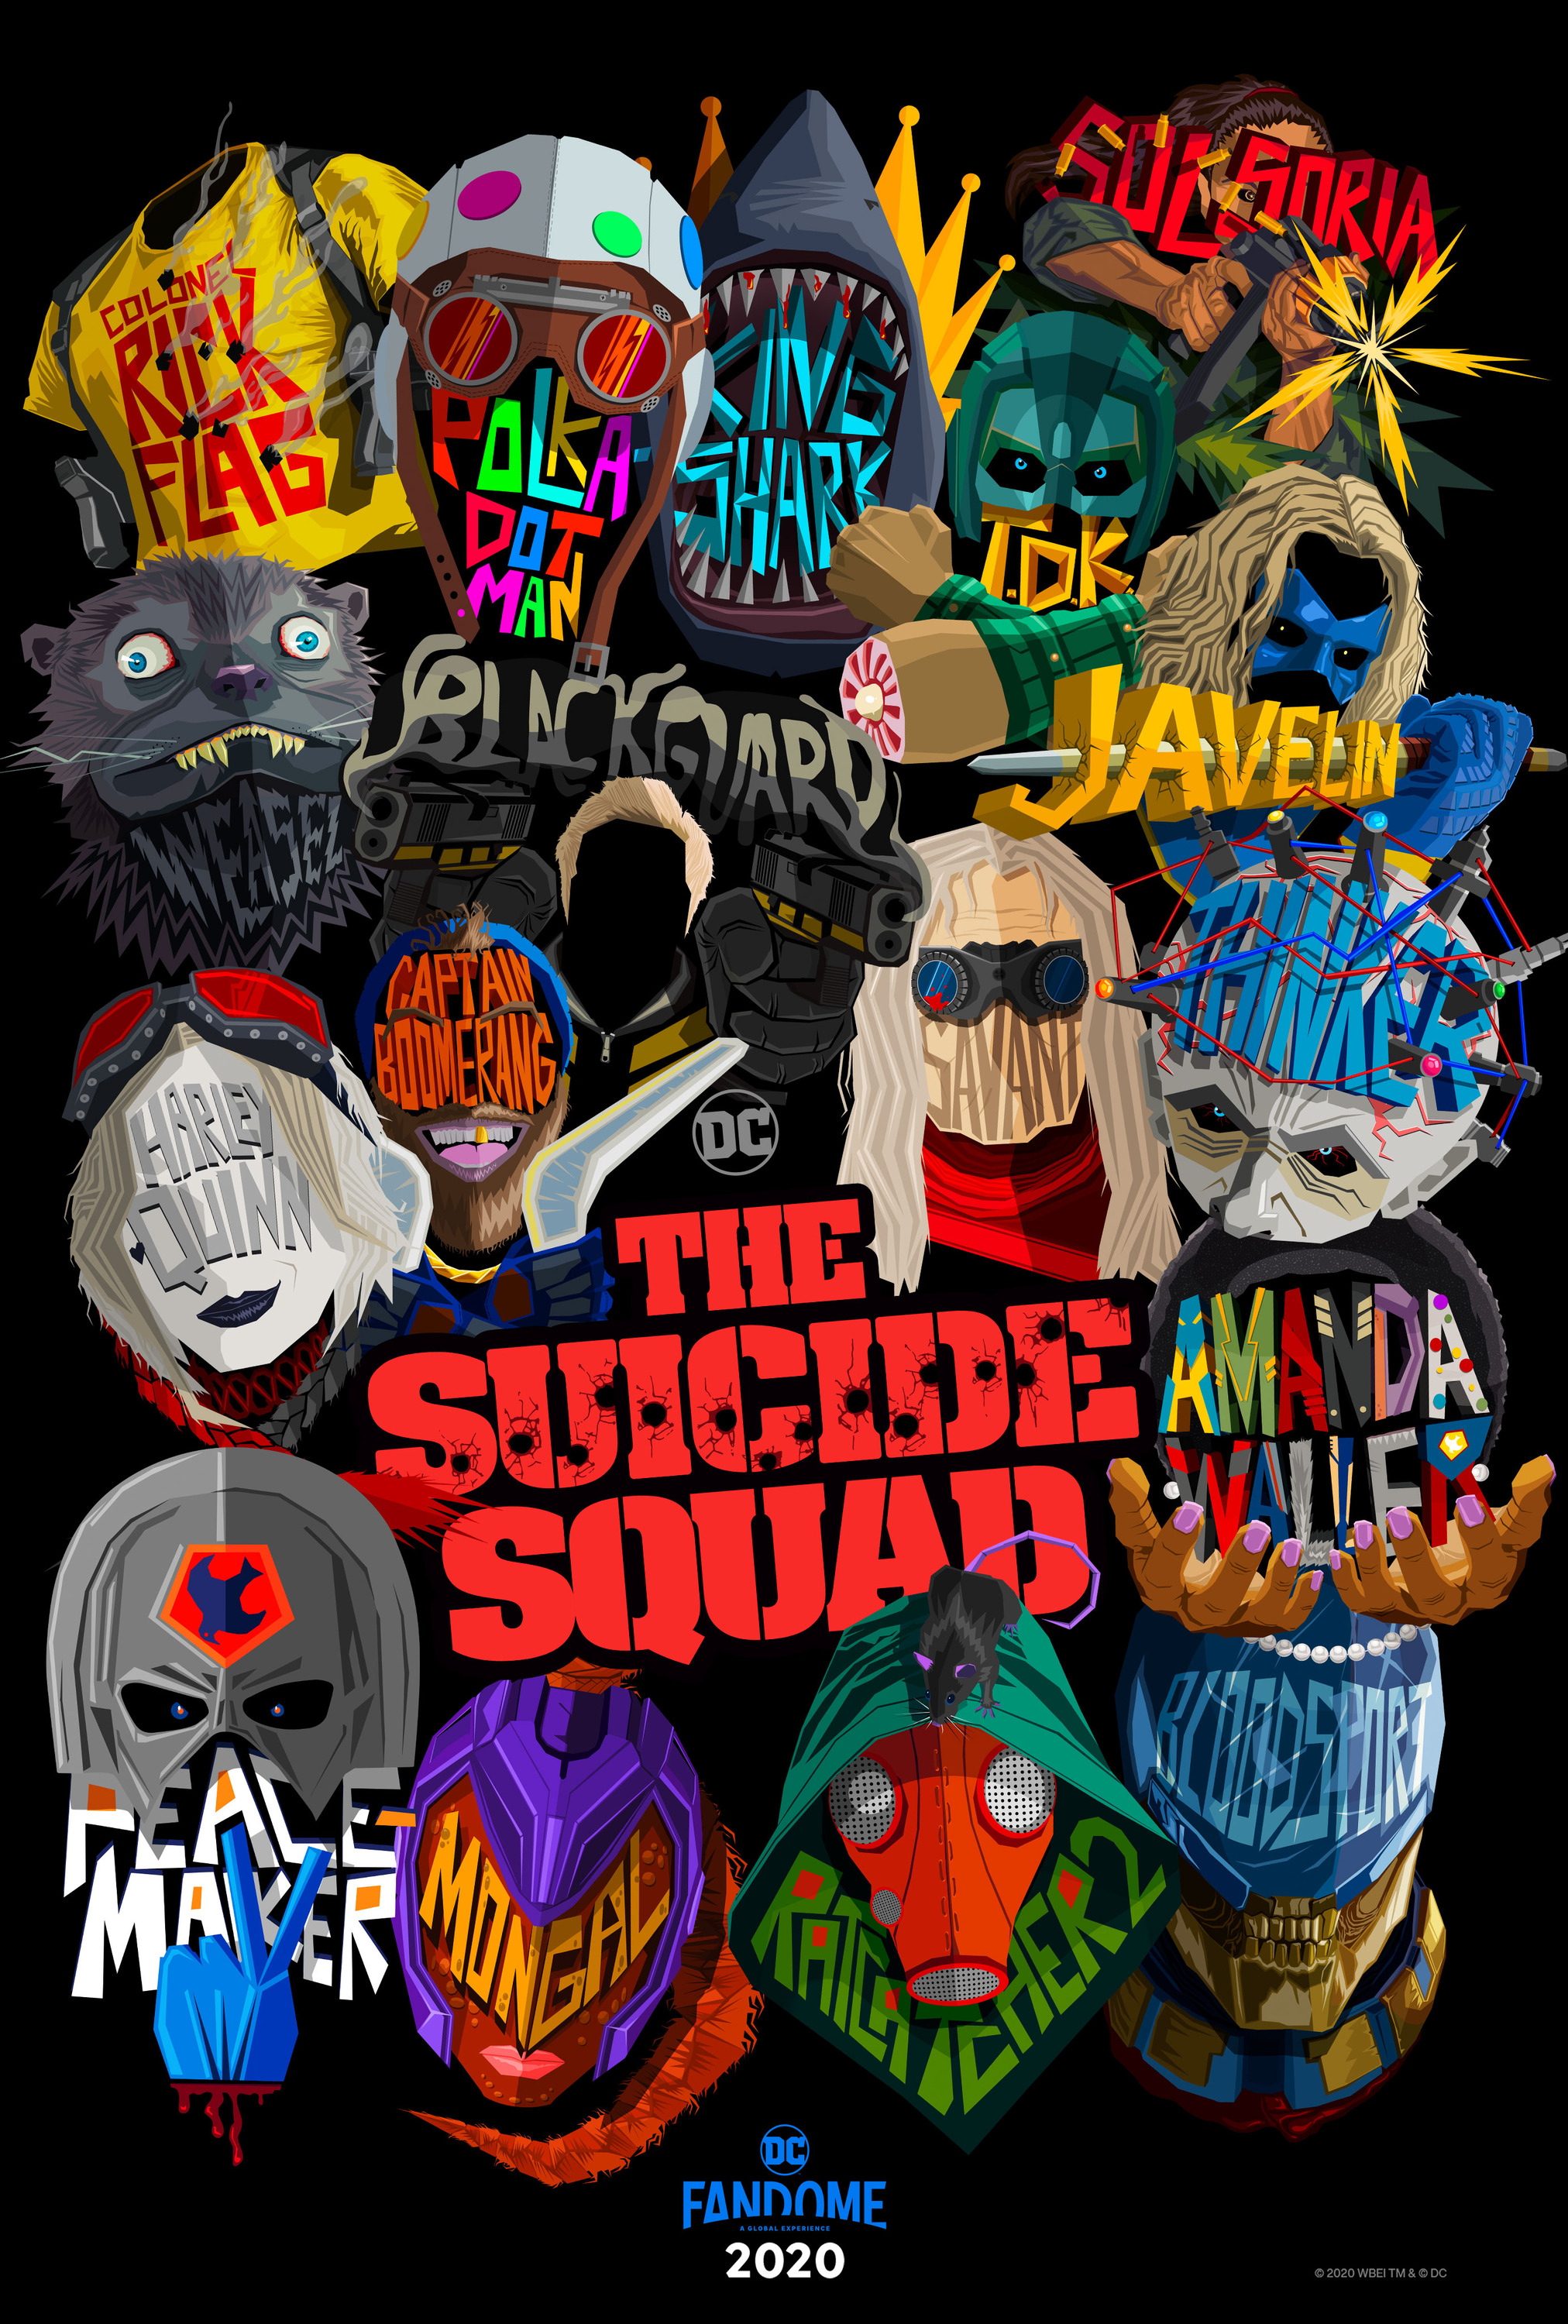 Squad 2 suicide 'Suicide Squad